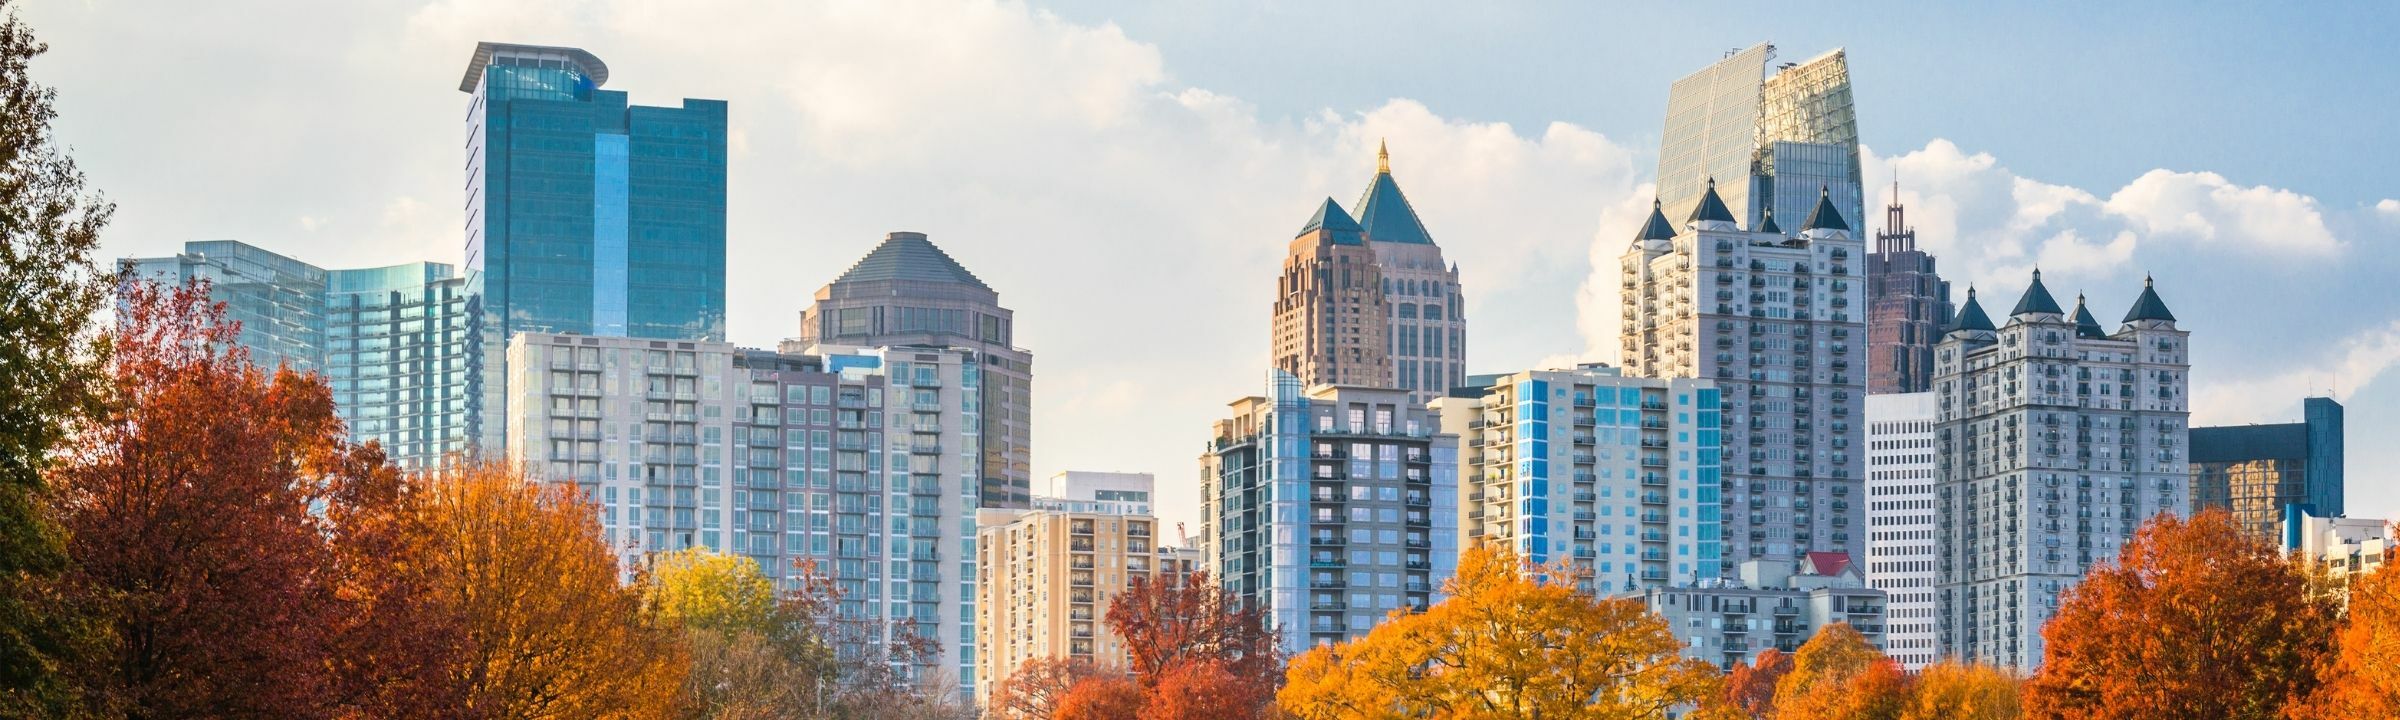 Atlanta Georgia midtown skyline from Piedmont Park in autumn